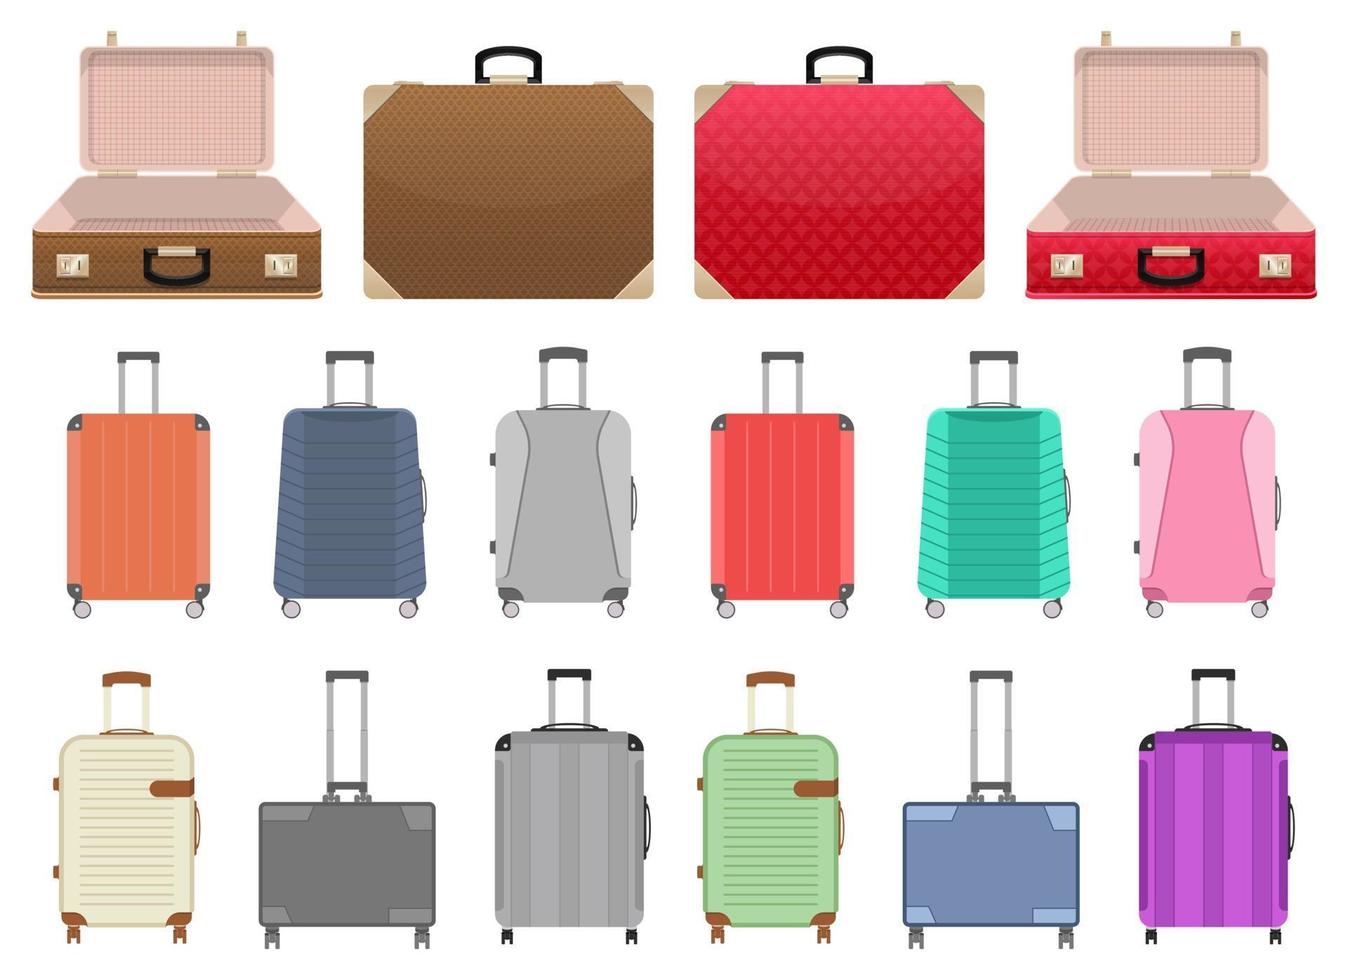 Suitcase vector design illustration set isolated on white background